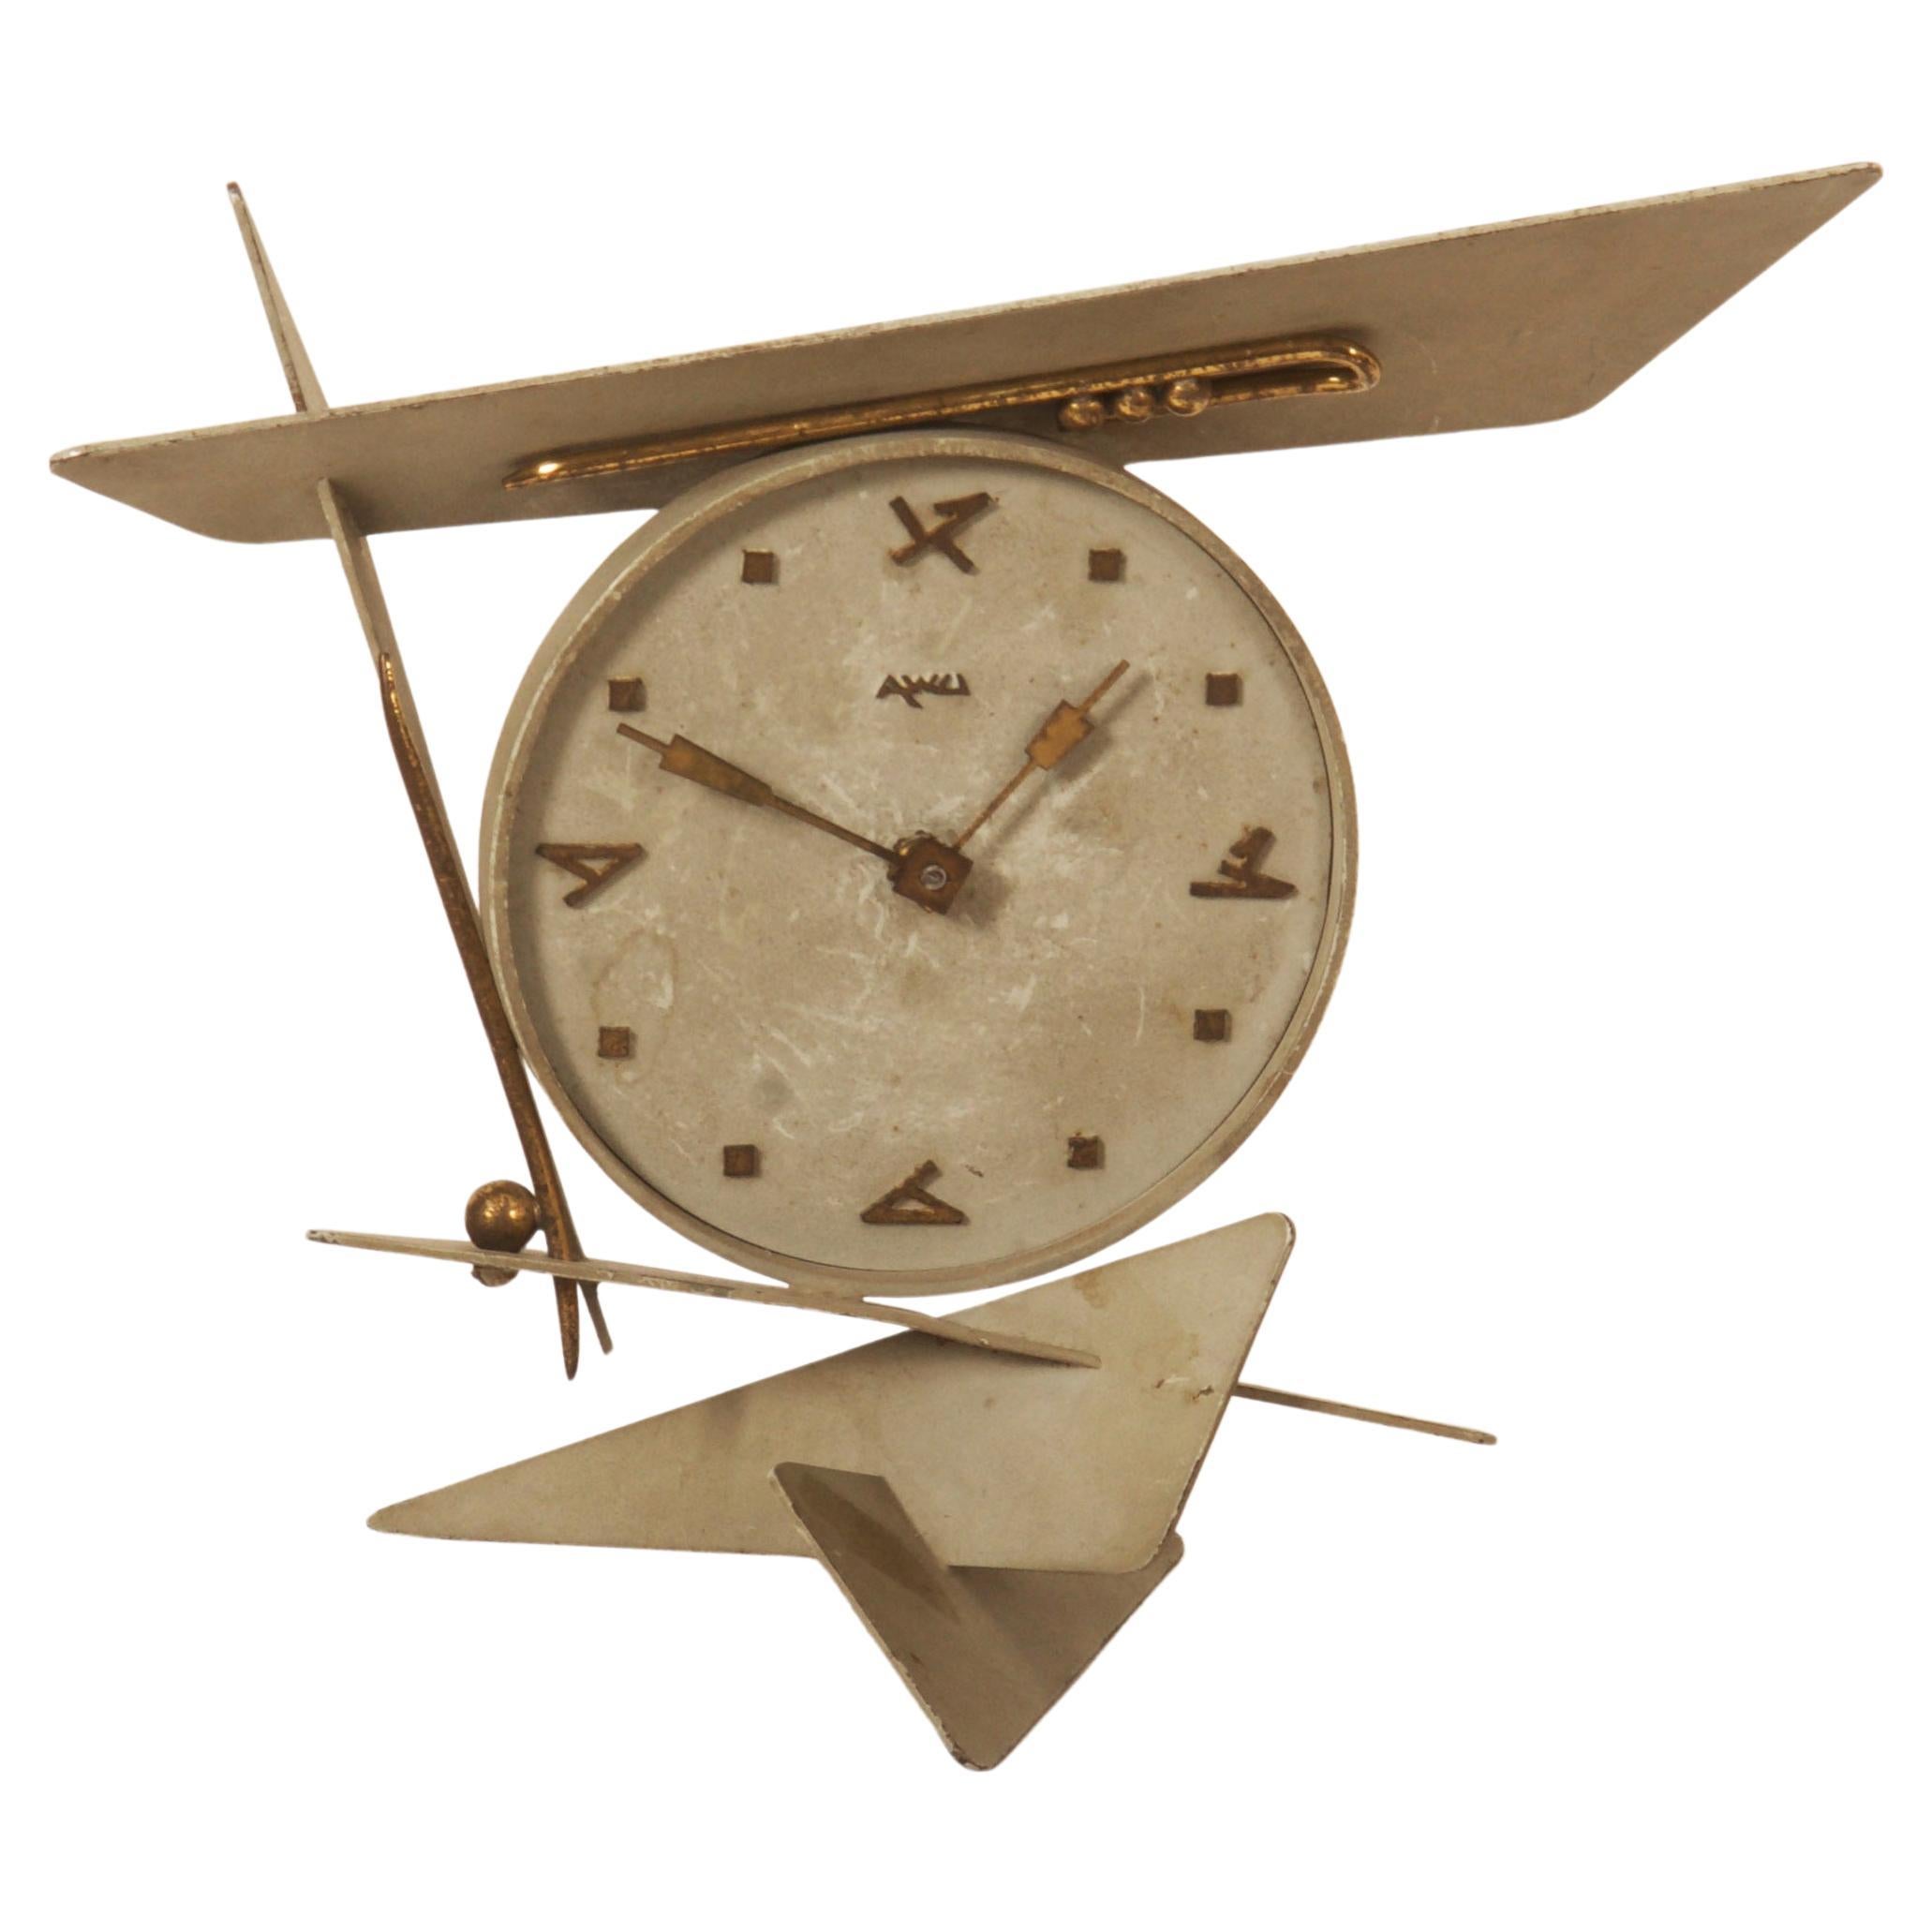 Bauhaus Adrianus Willem Aad Uithol - AWU Table Clock For Sale